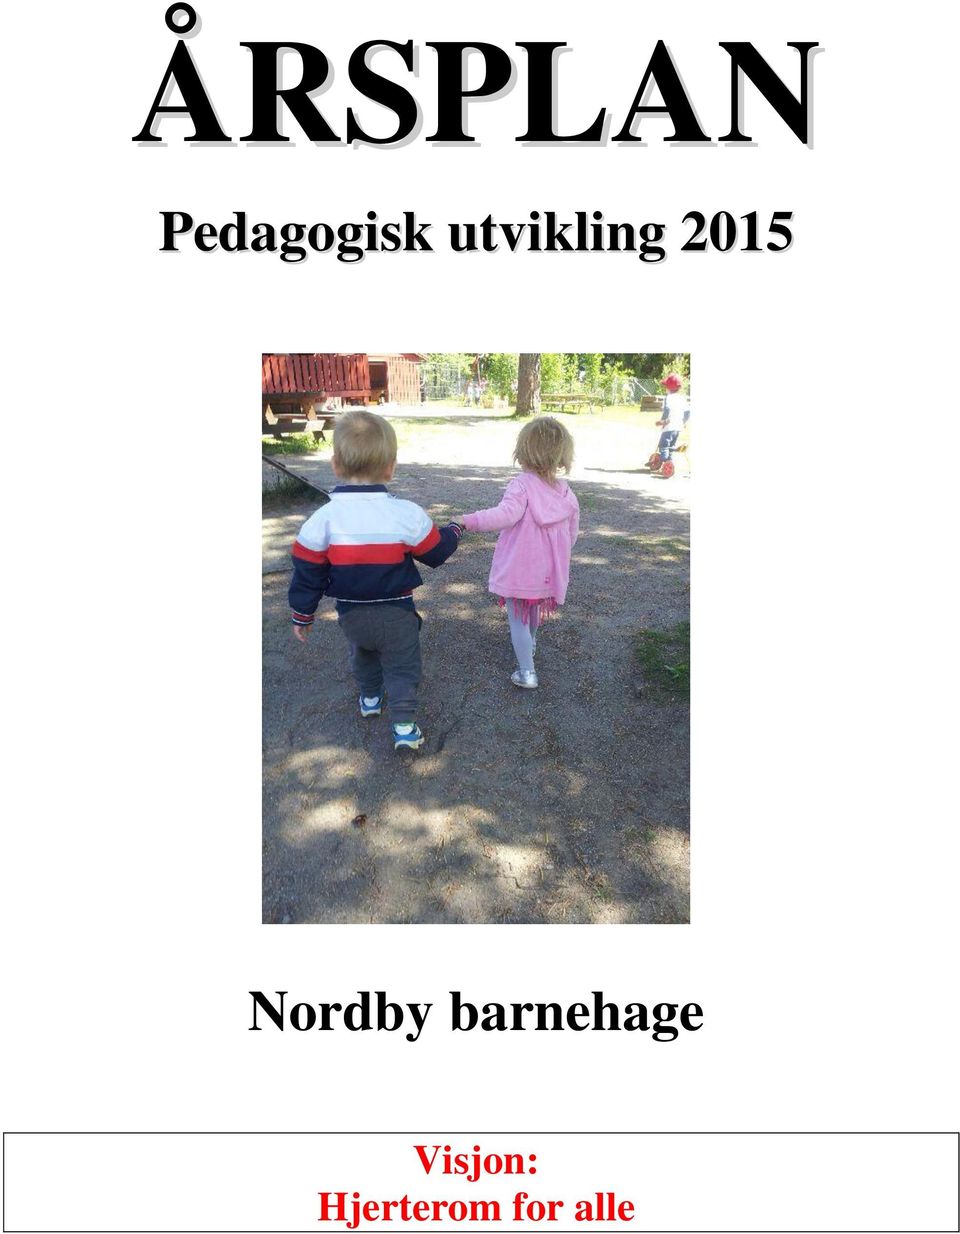 Nordby barnehage